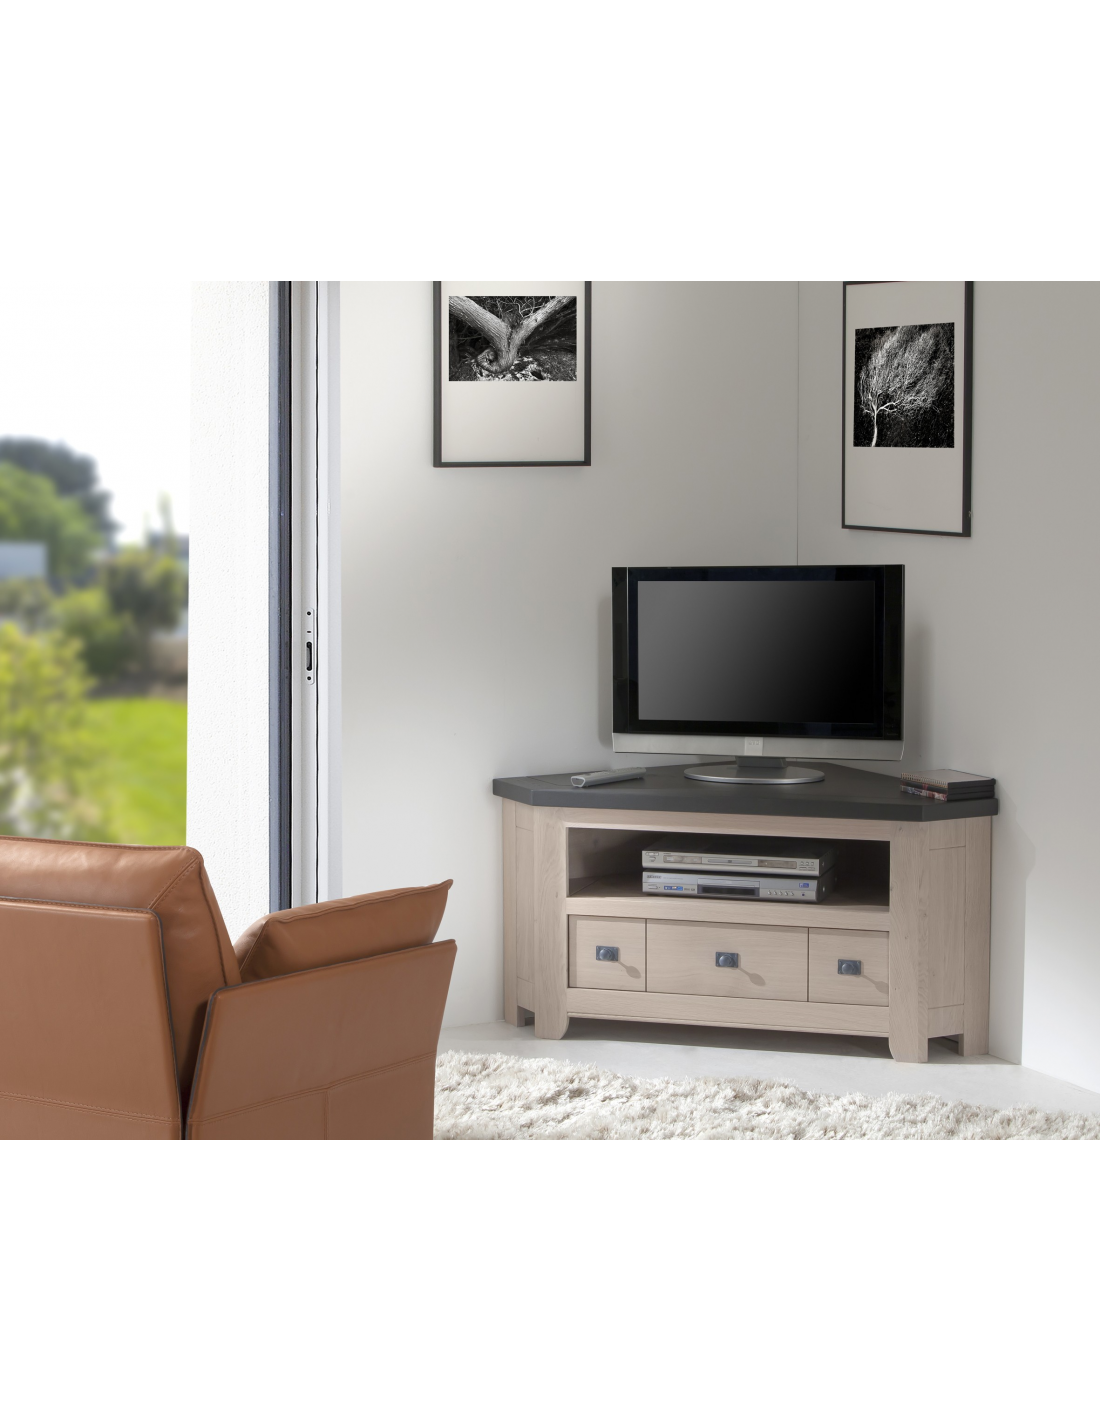 tv angle,collection whitney,ateliers de langres,meubles ruhland,meuble hifi